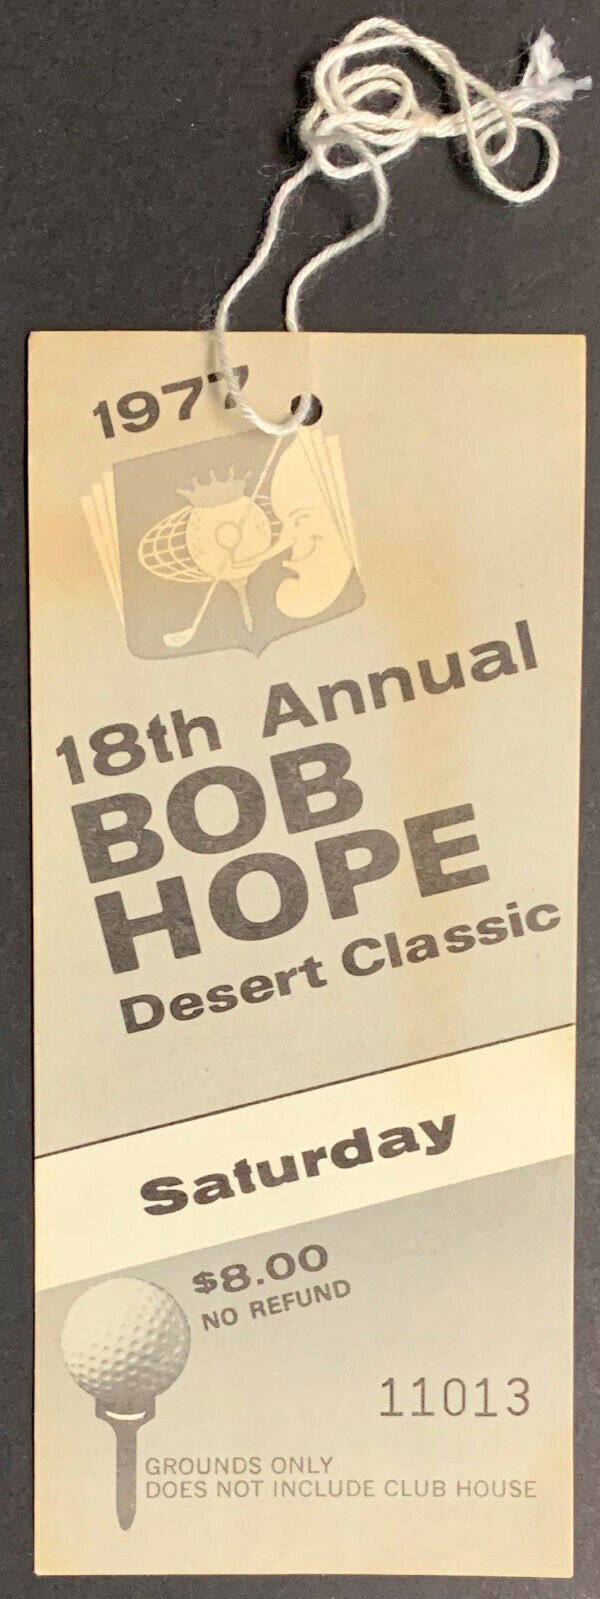 1977 PGA 18th Annual Bob Hope Desert Classic Pass #11013 Pro Golf Tournament